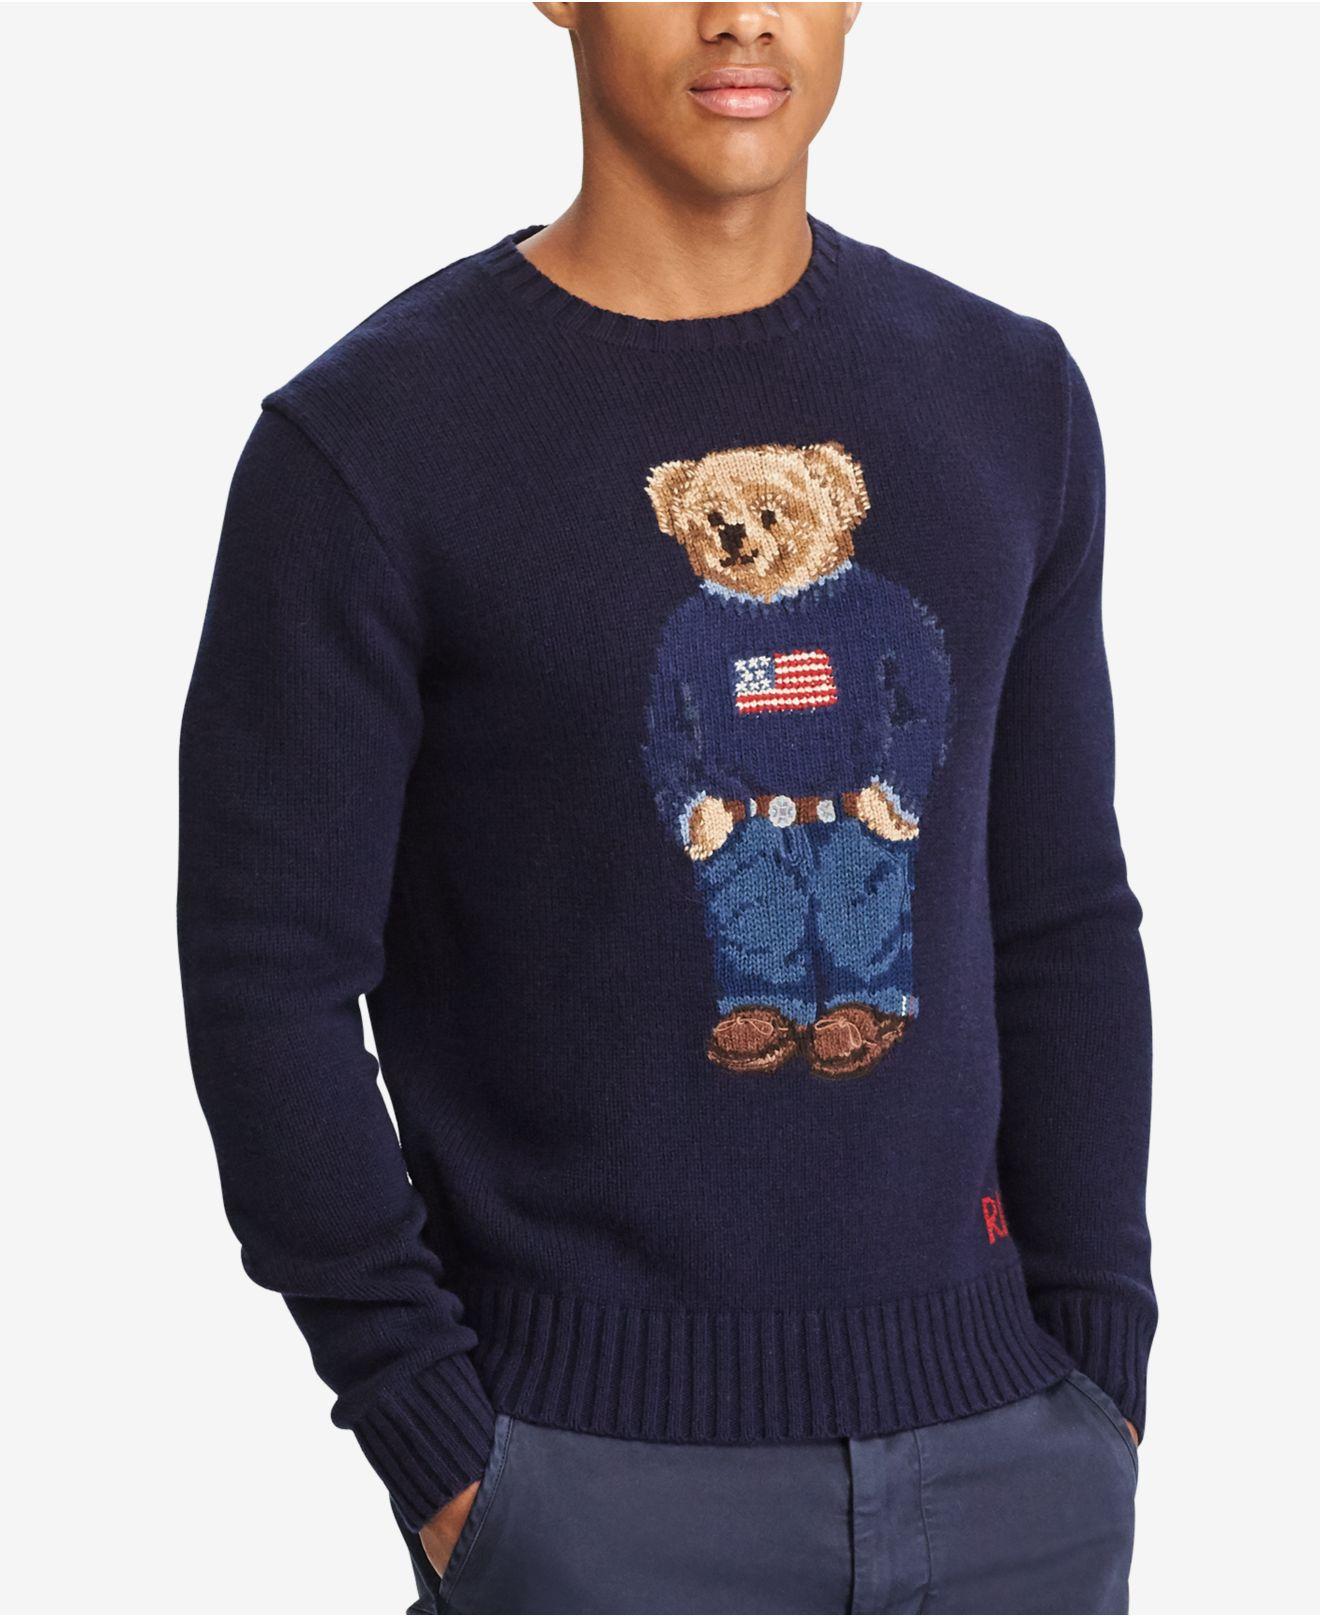 Polo Ralph Lauren Wool Bear Sweater in Navy (Blue) for Men - Save 55%